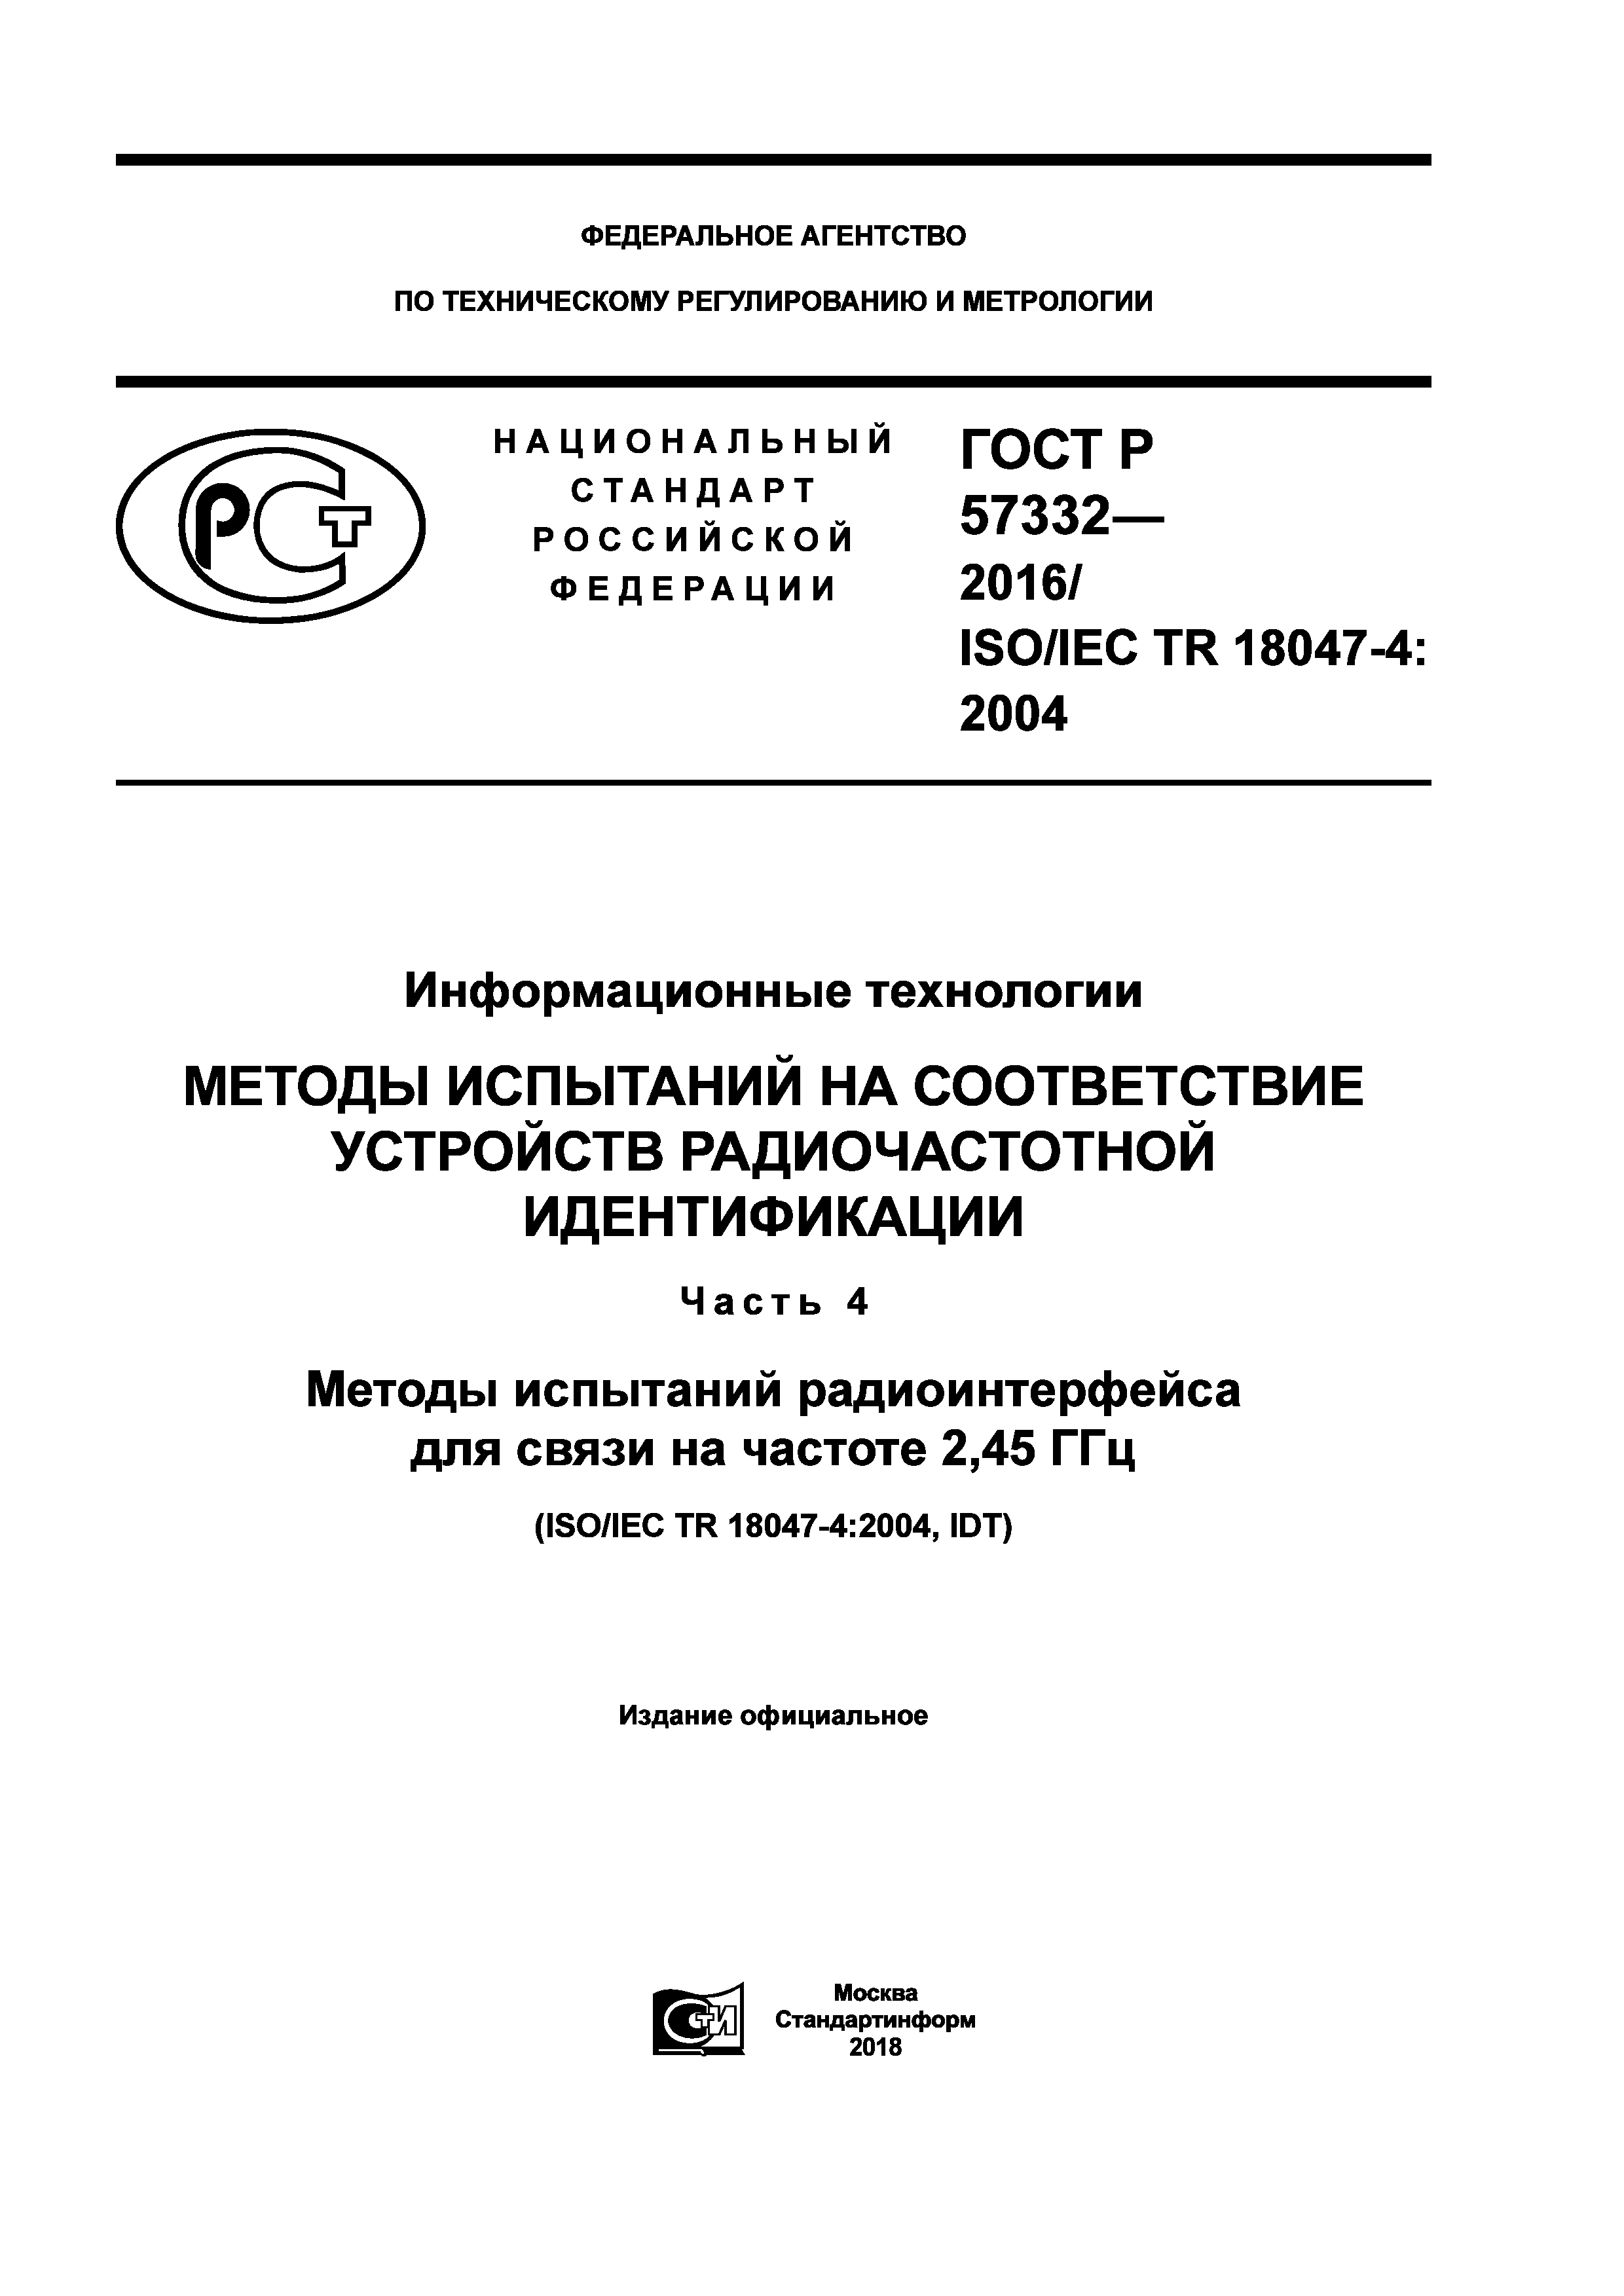 ГОСТ Р 57332-2016